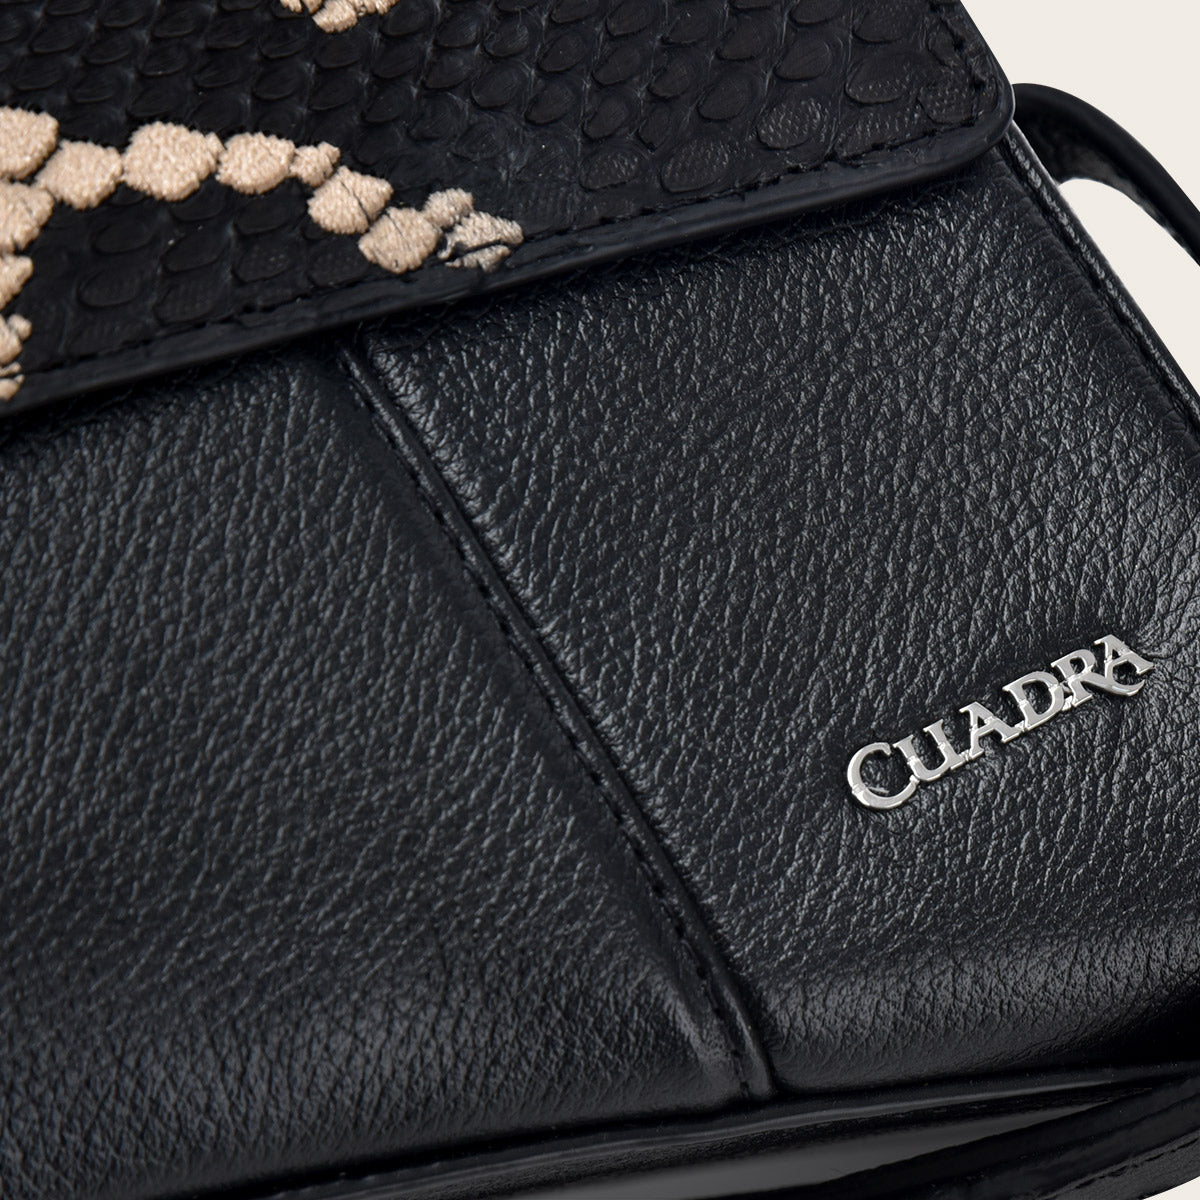 Black exotic leather asymmetrical handbag